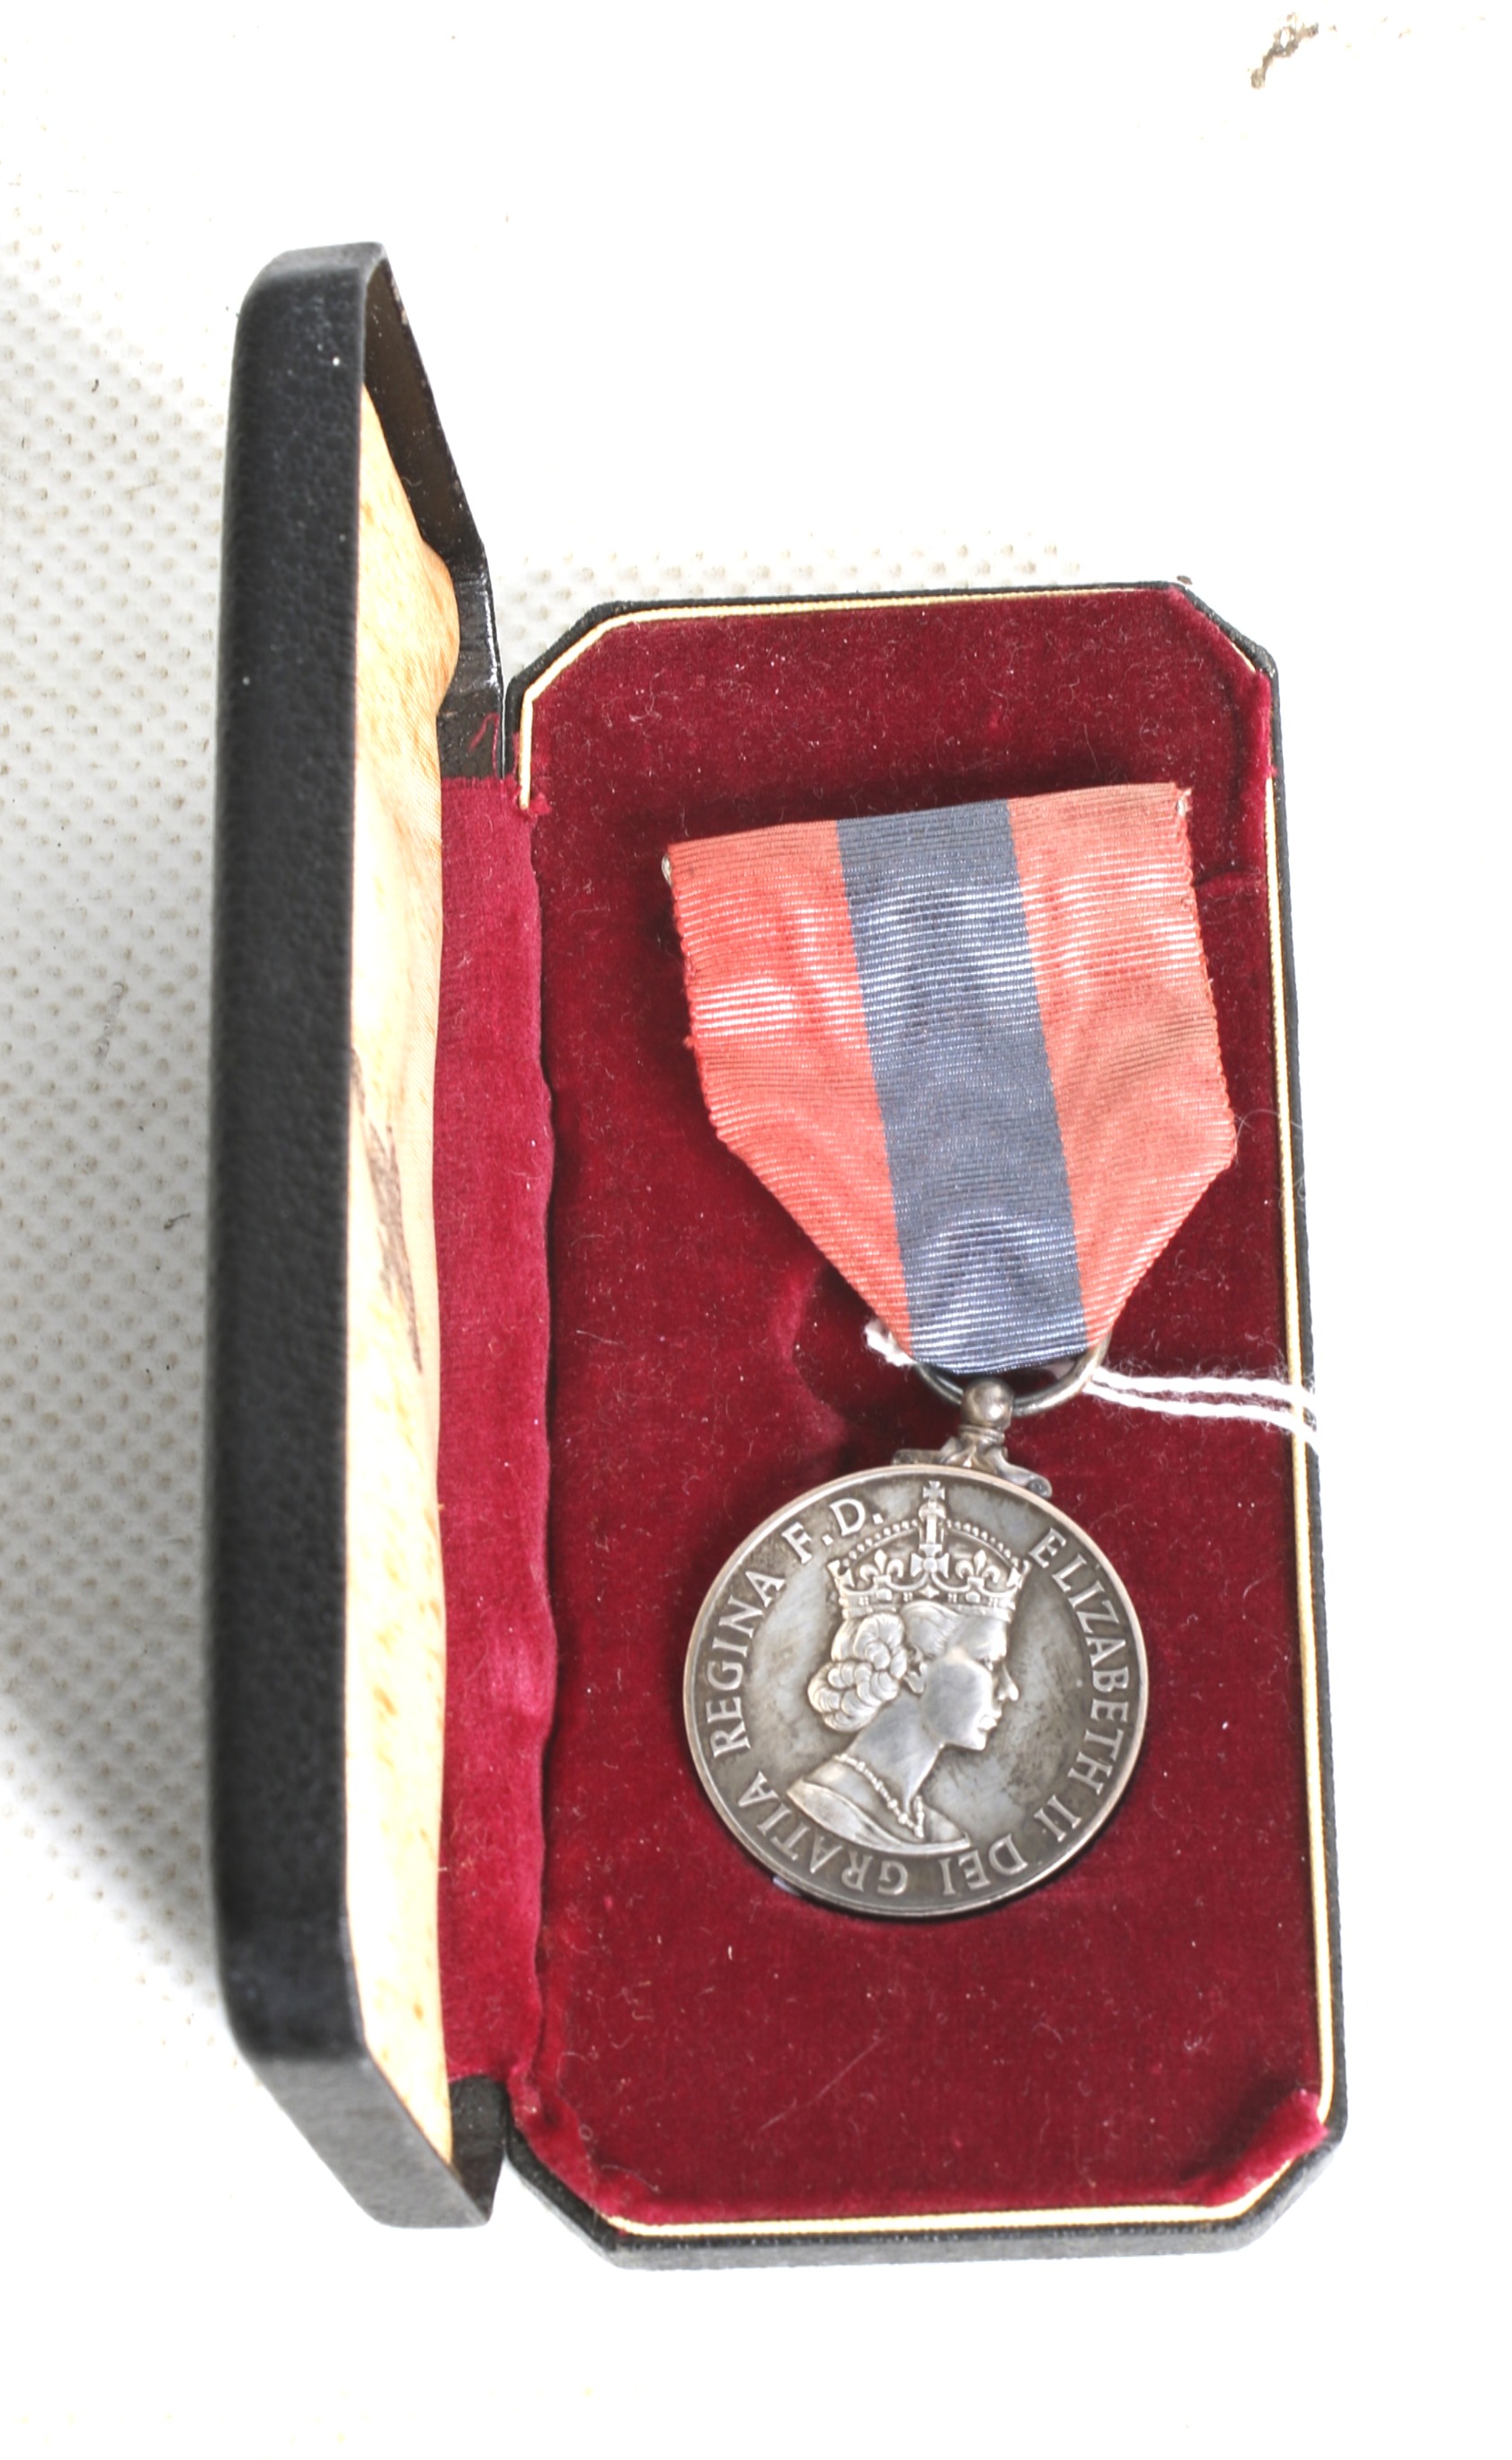 Elizabeth II Faithful Service Medal awarded to Peter Irvine, Royal Mint, in original box.